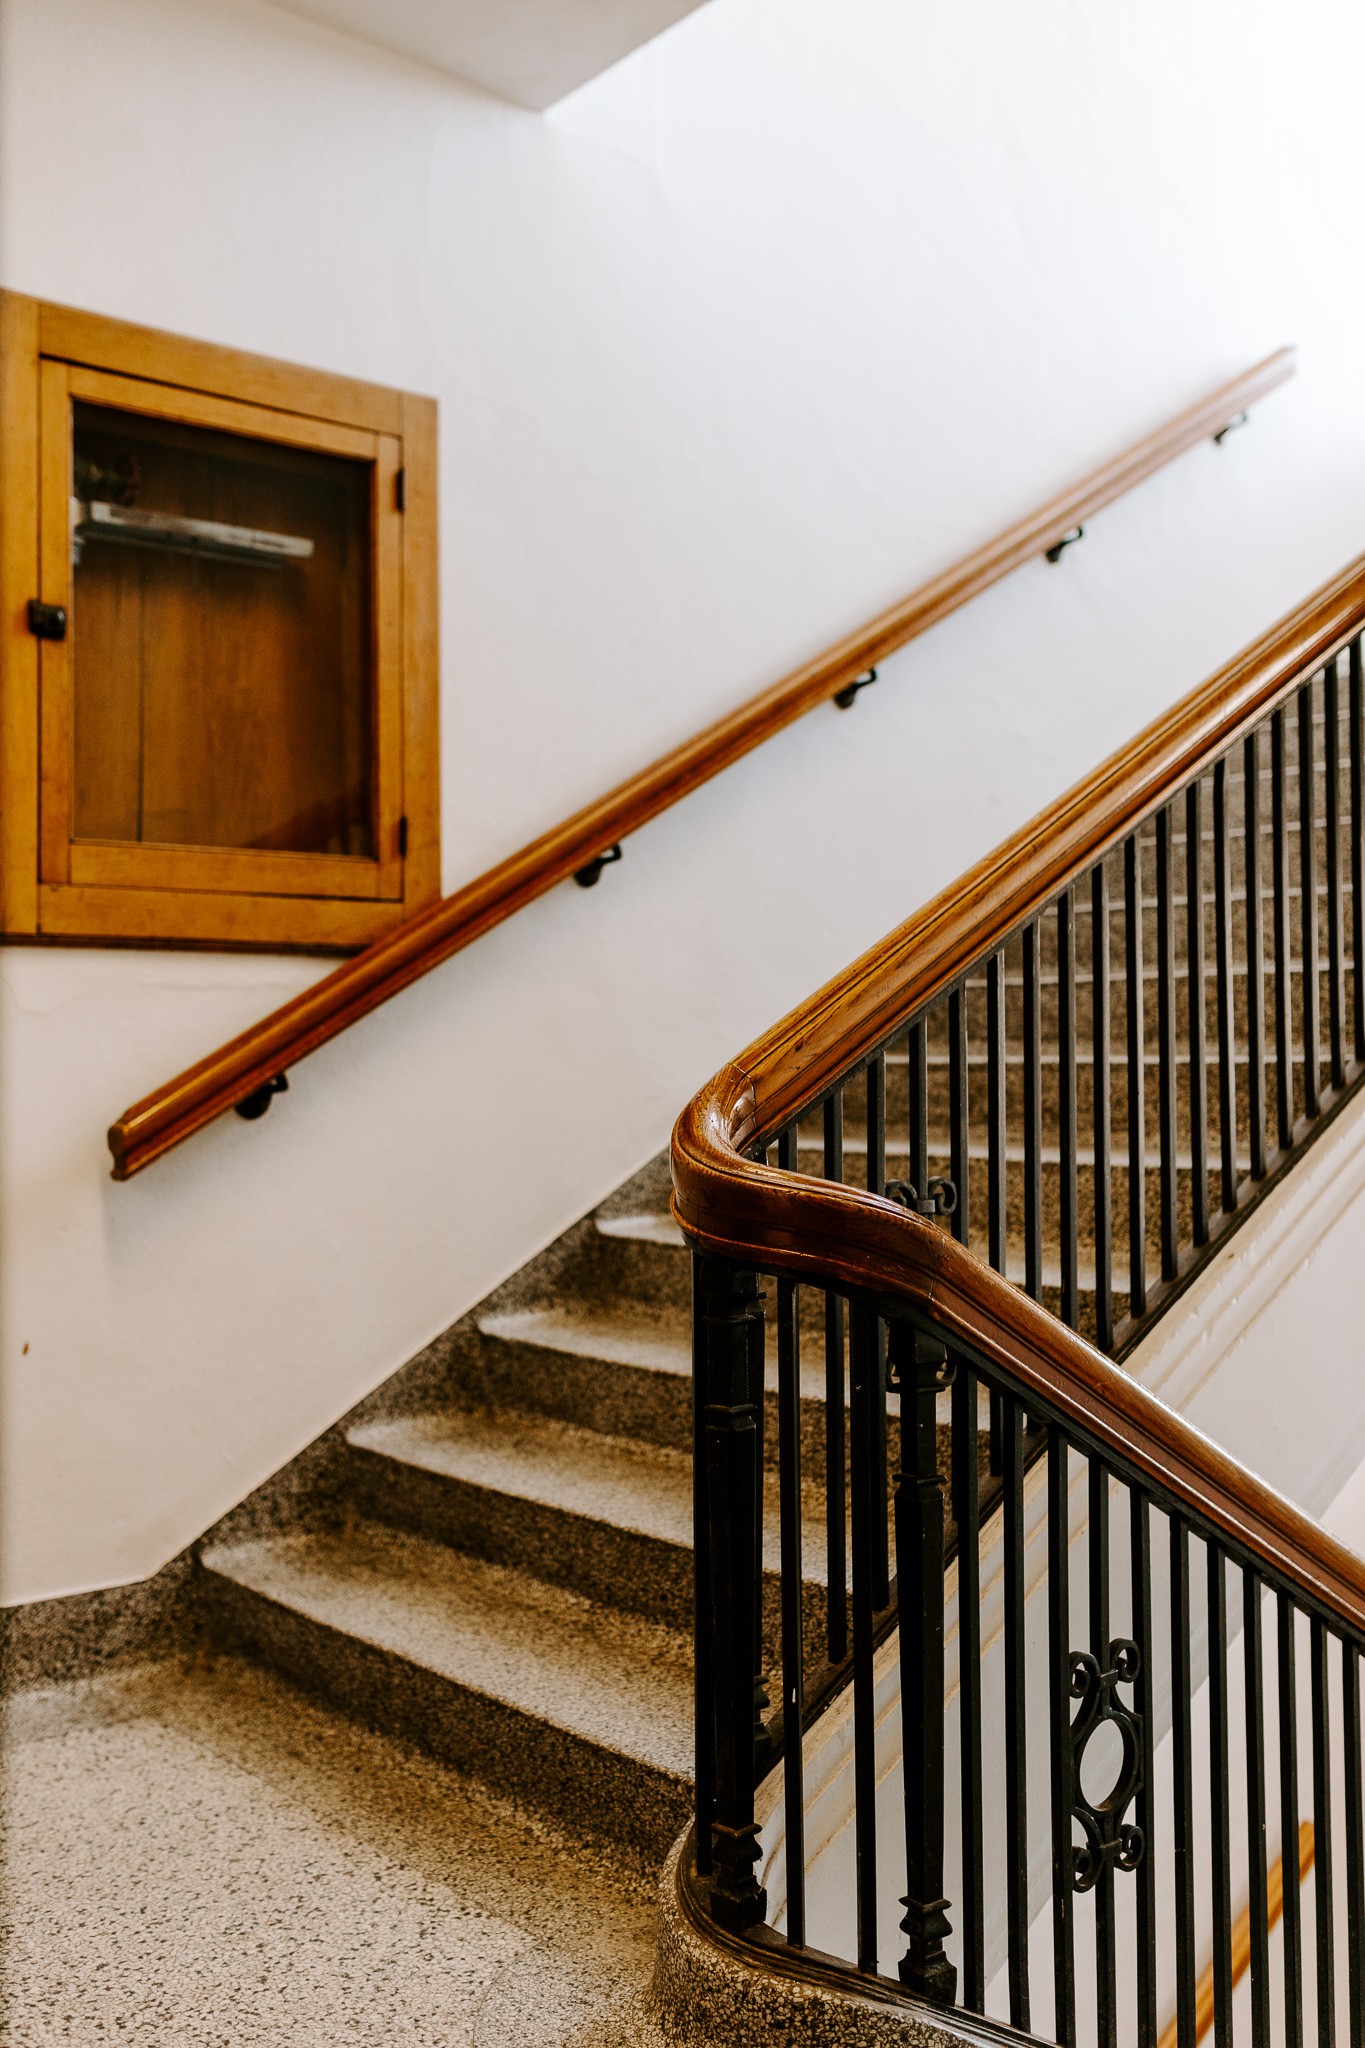 Zenith DCHS interior stairwell and banister